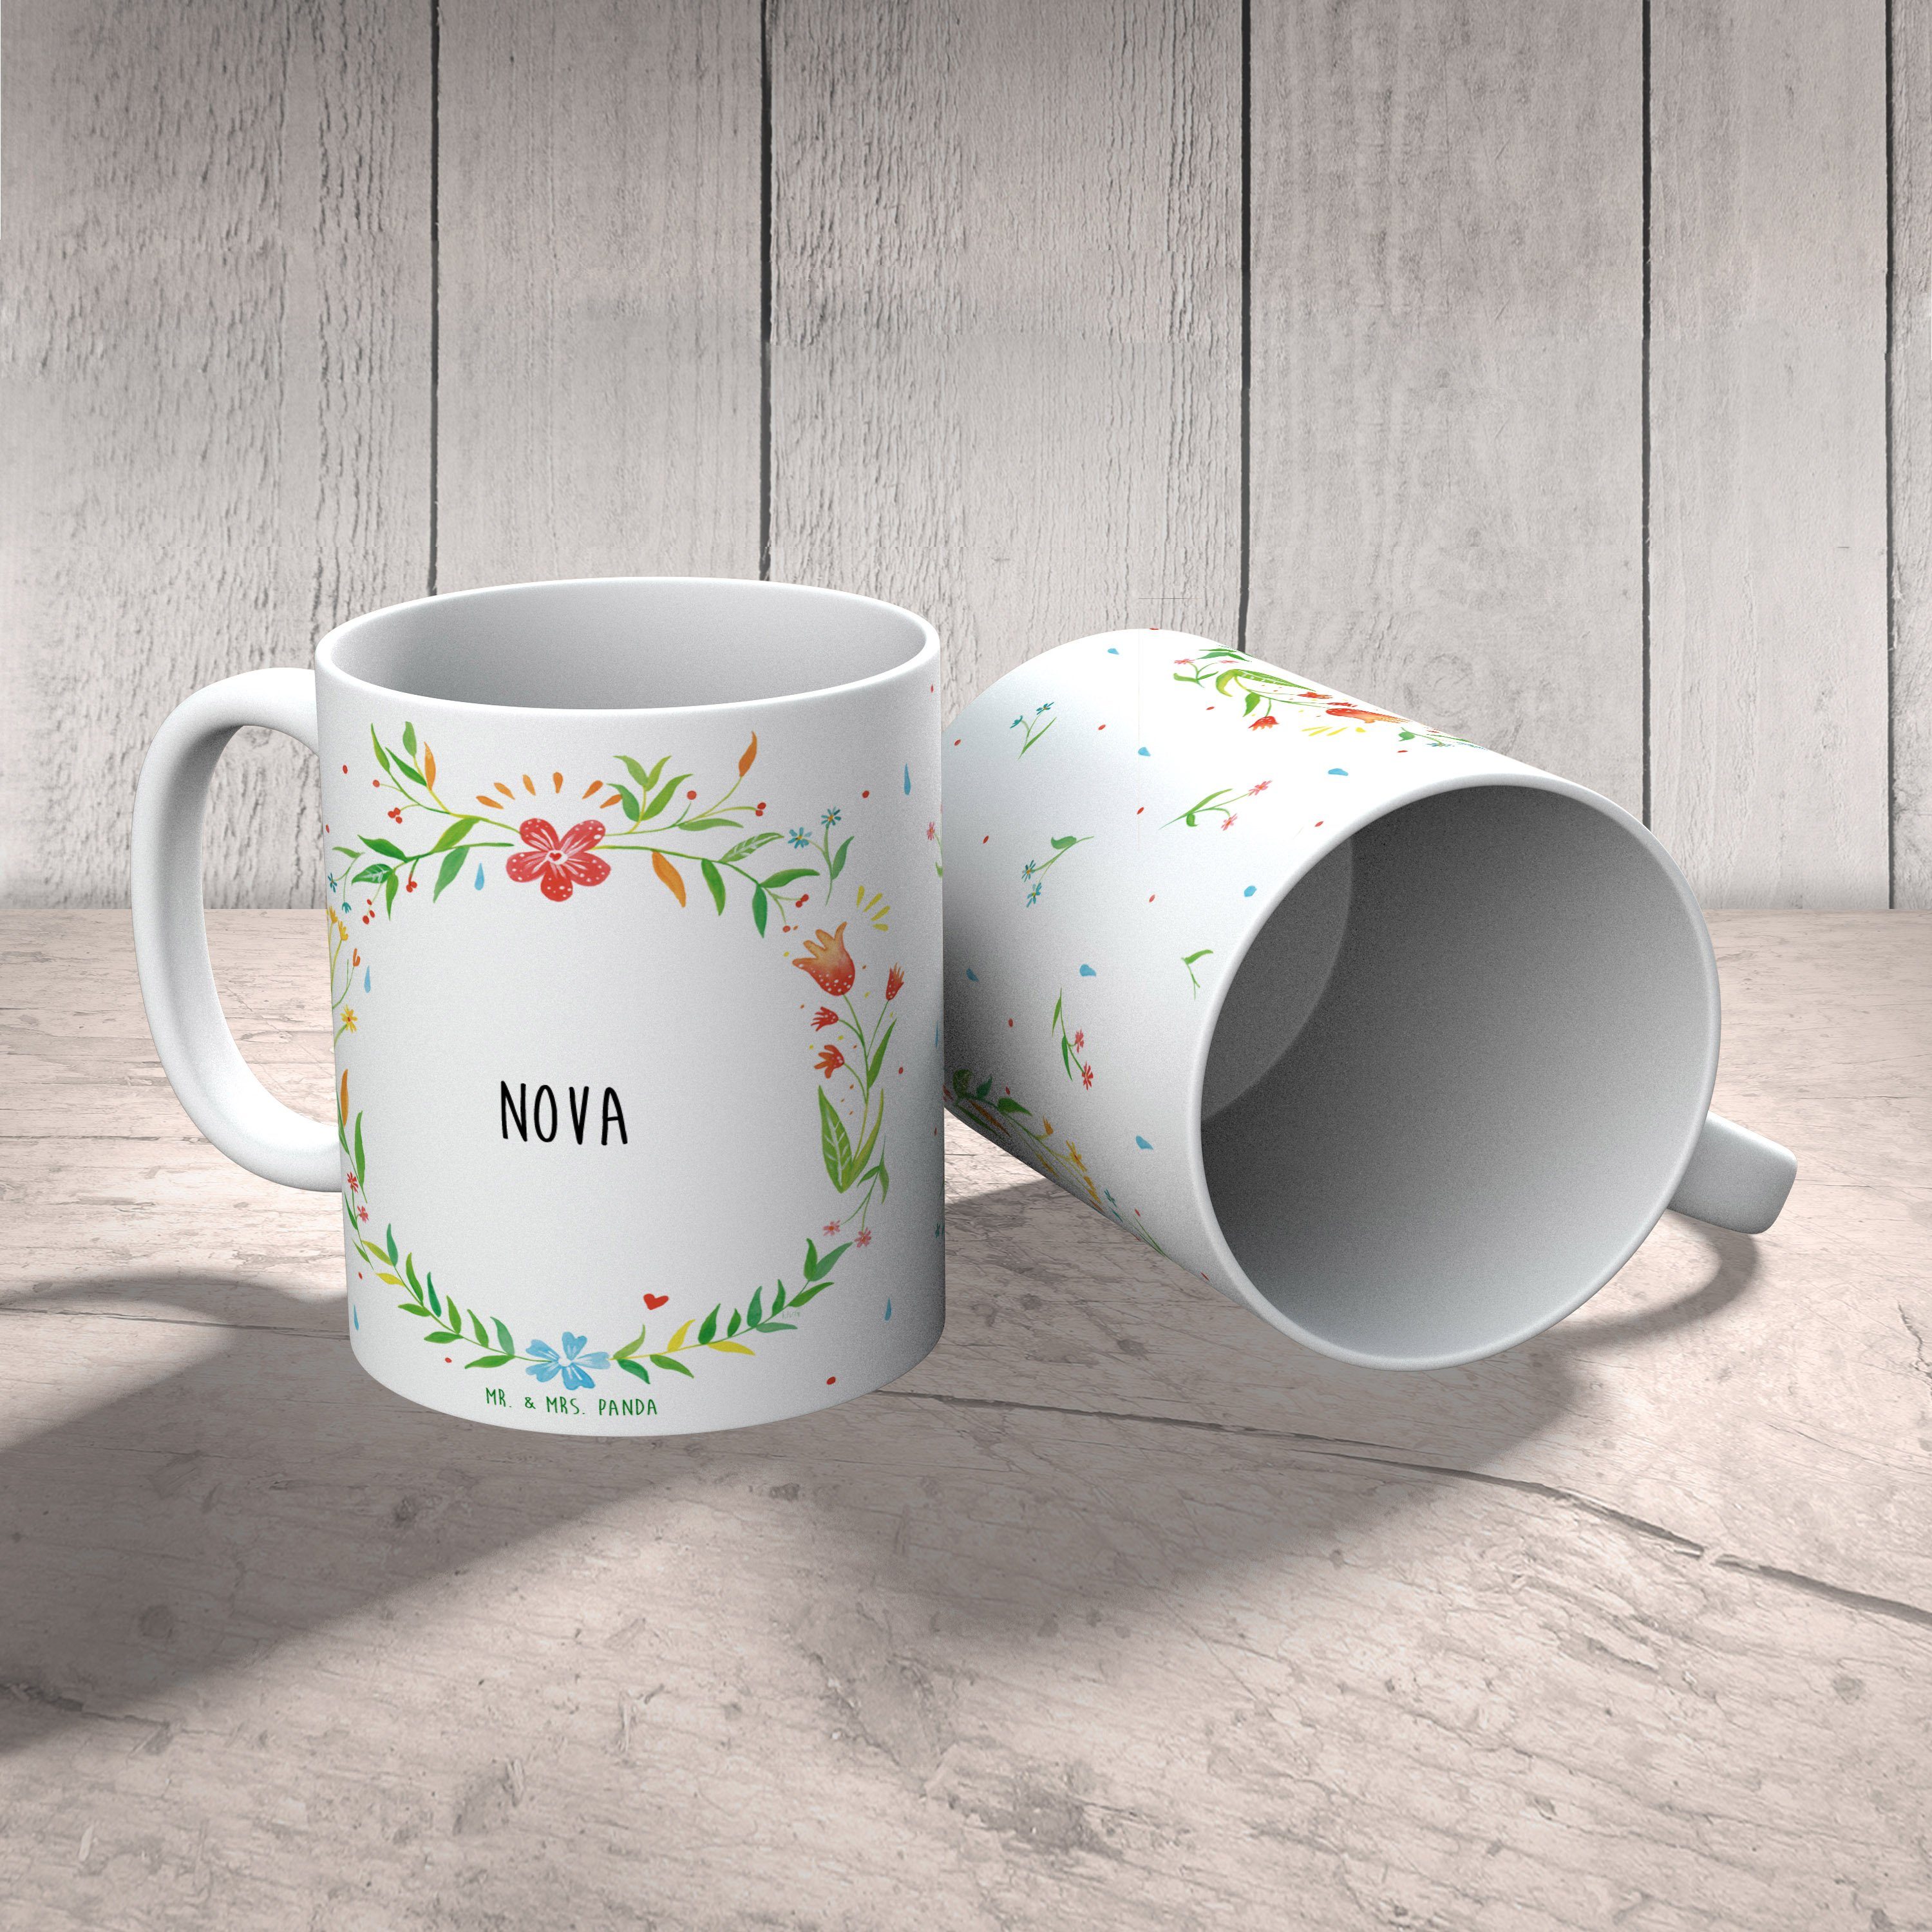 Mr. & Mrs. Panda Tasse Tasse, Nova Motive, - Büro Geschenk Geschenk, Keramik Tasse, Porzellant, Tasse